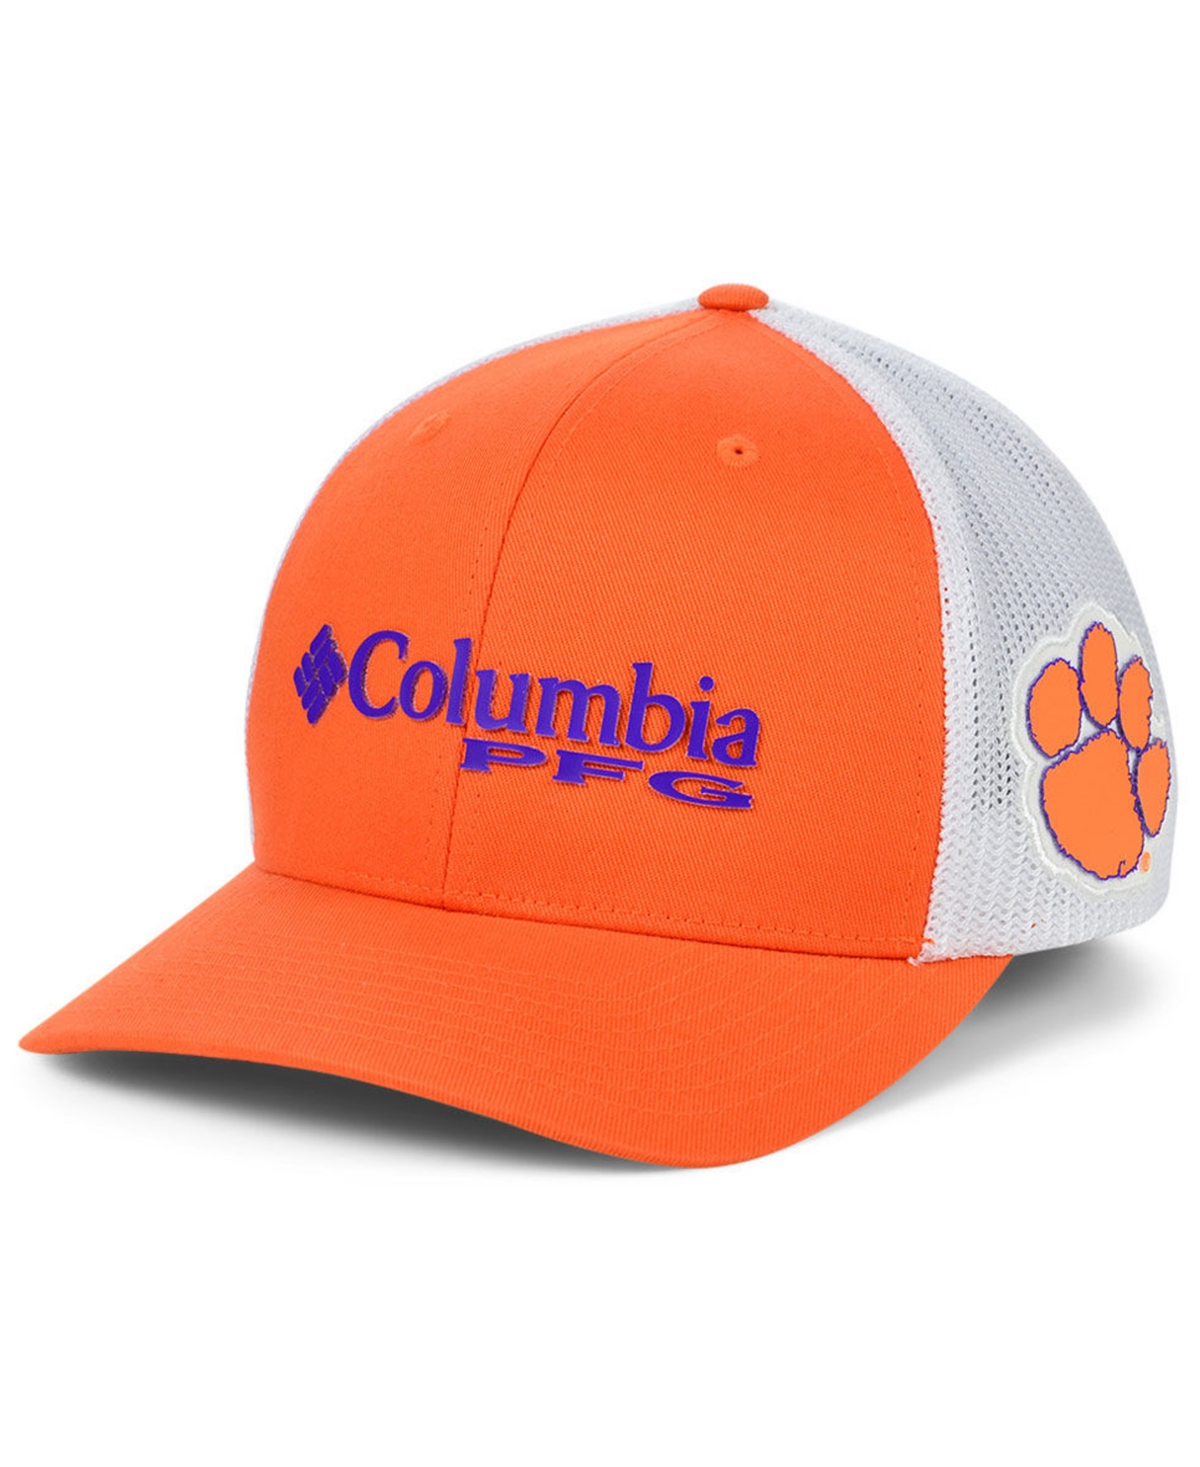 Columbia Clemson Tigers Pfg Stretch Fitted Cap In Orange,white